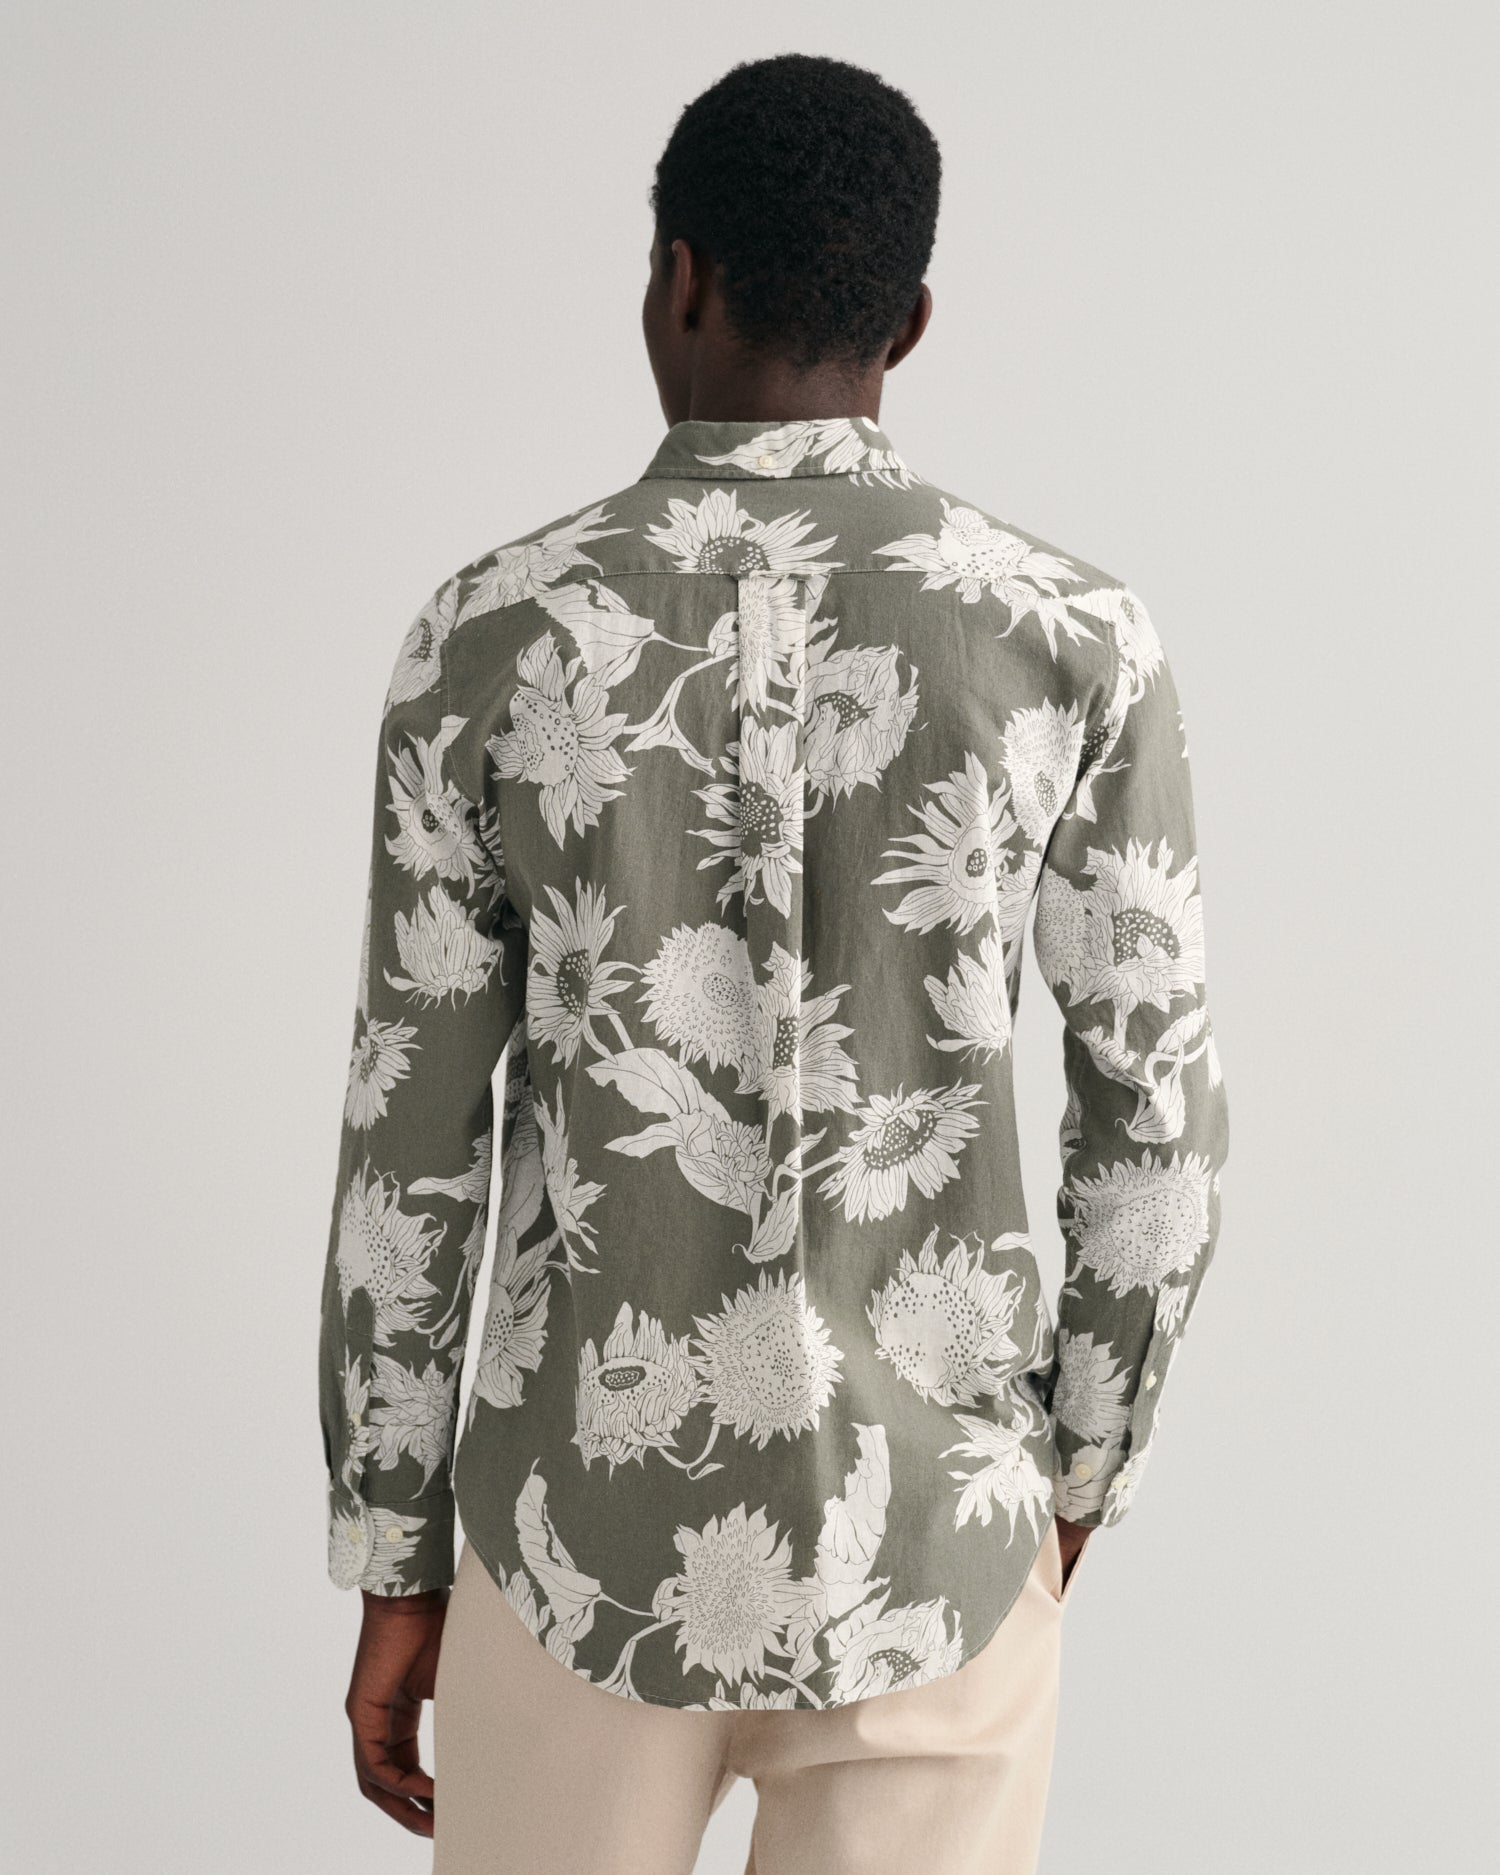 Gant Classic Floral Printed Button Down Collar Cotton Linen Casual Shirt